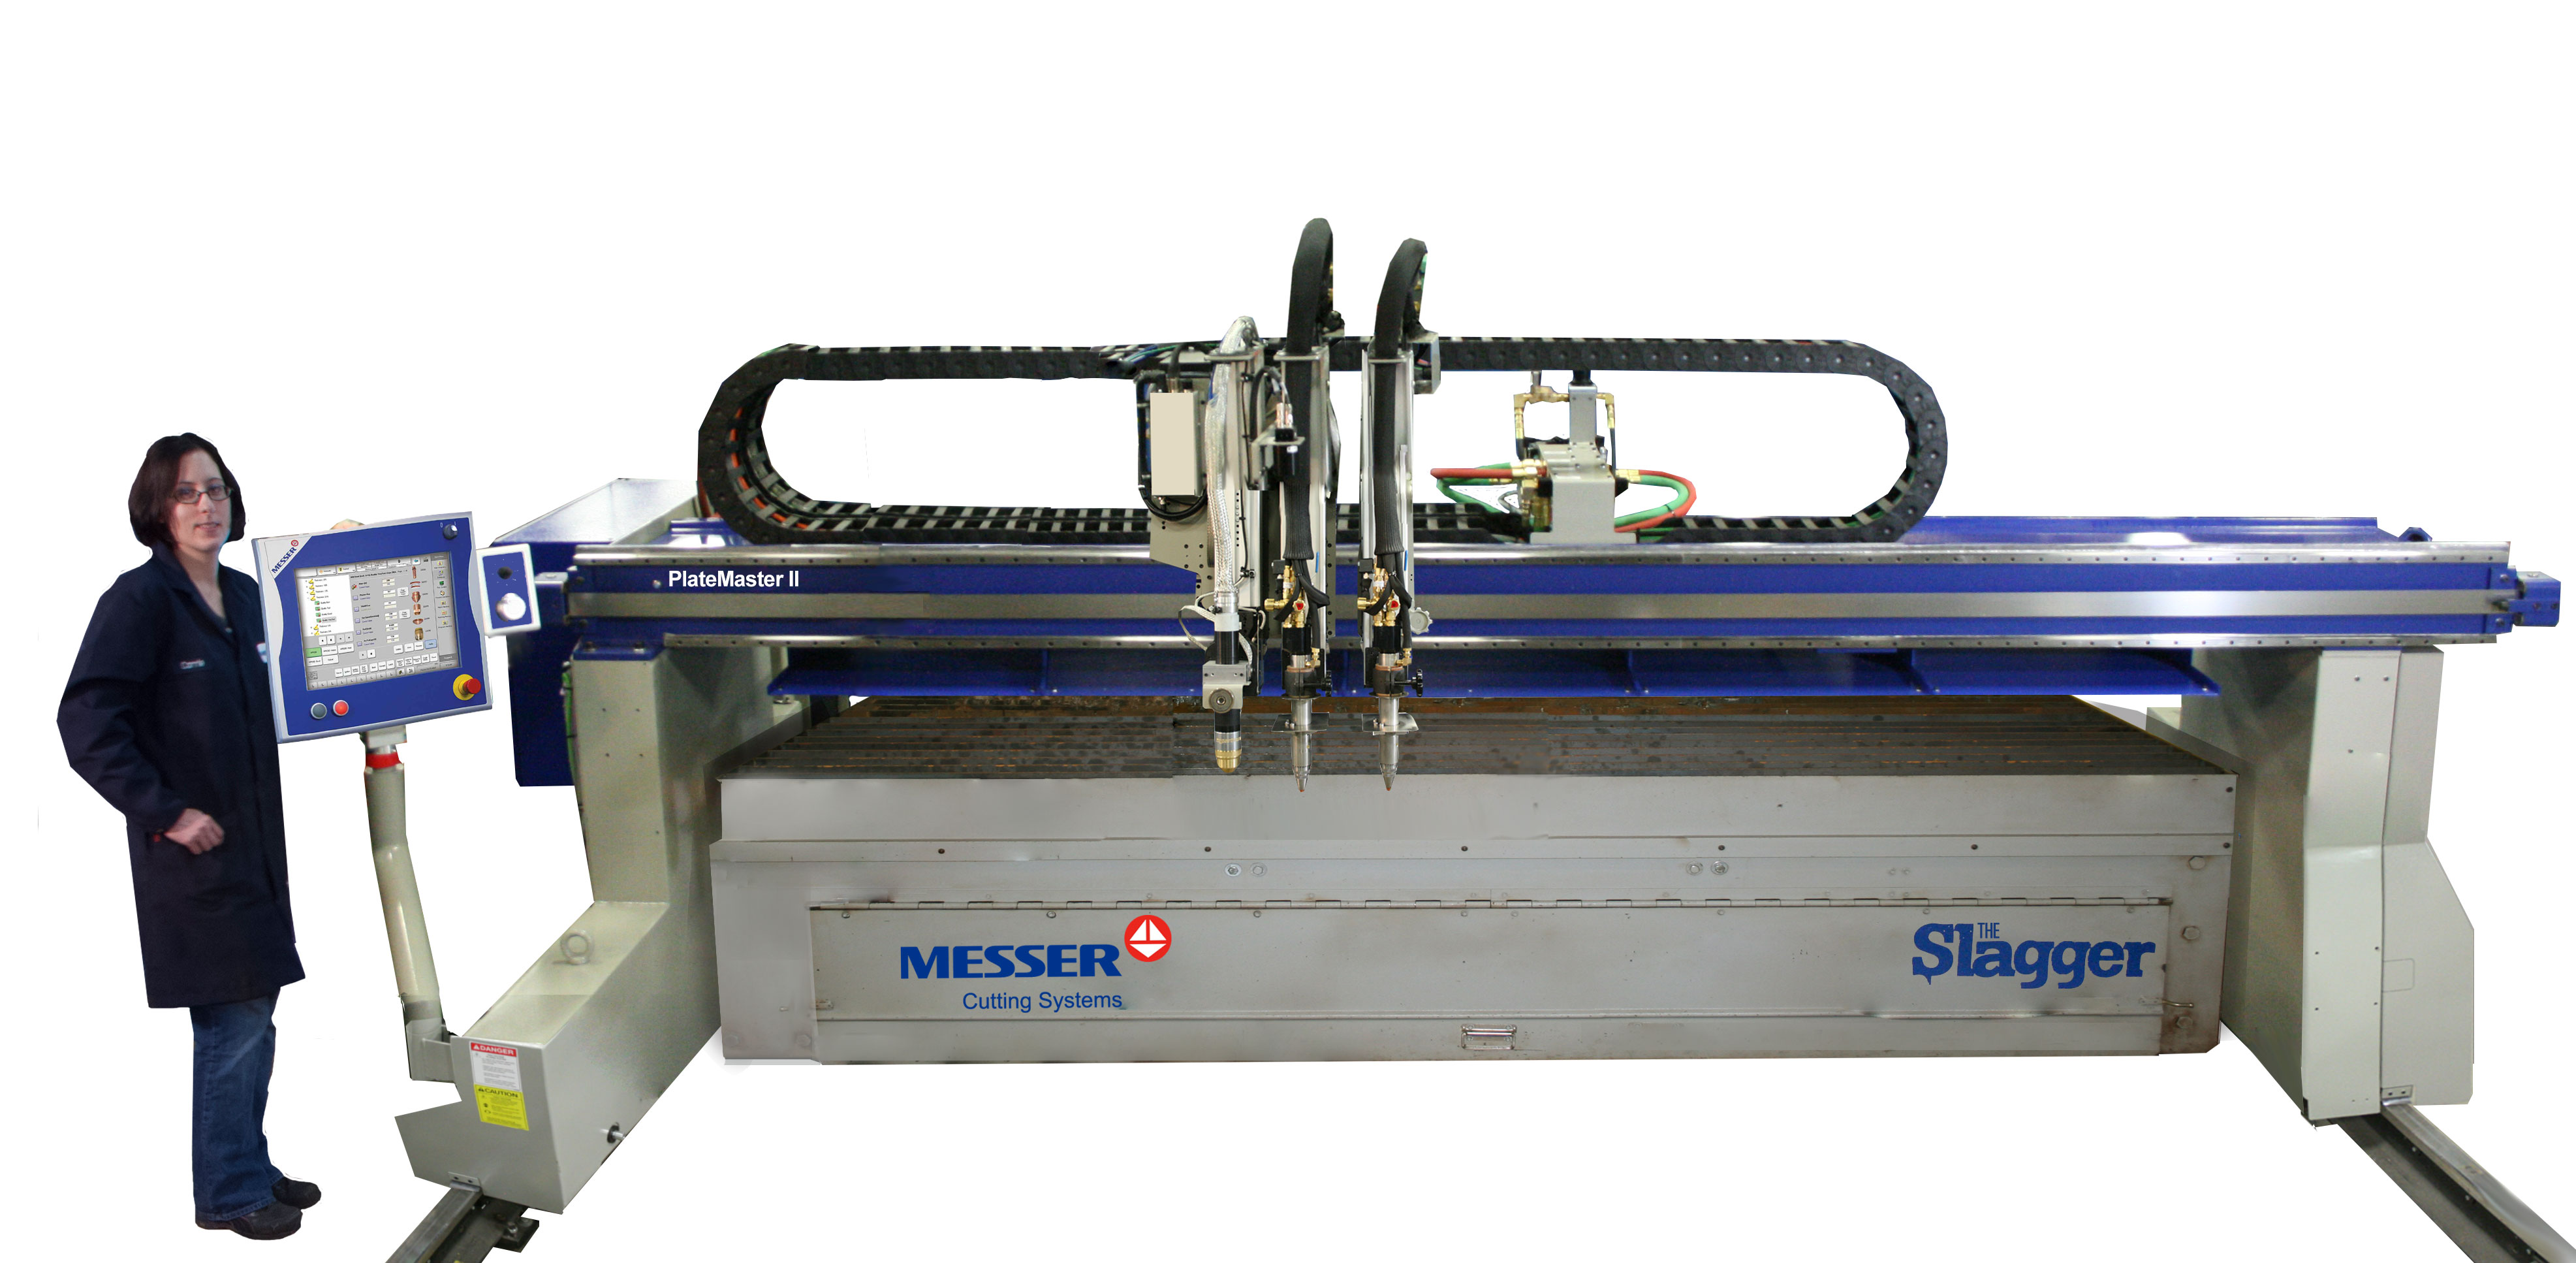 Messer PlateMaster II